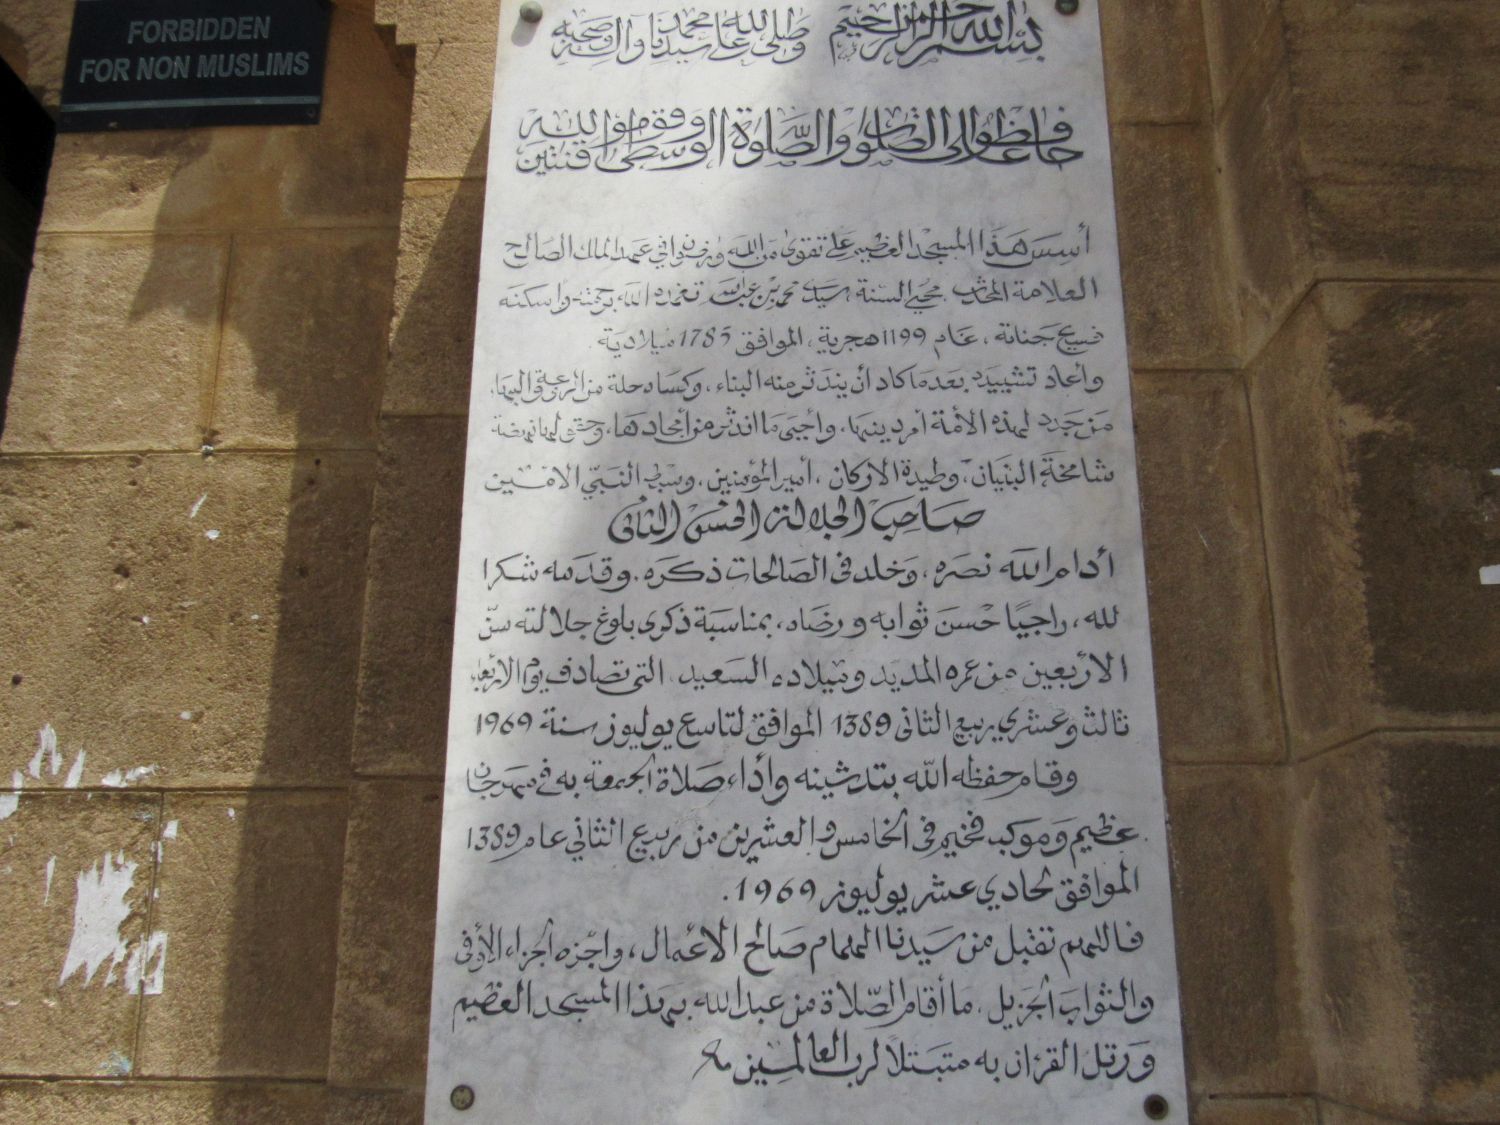 Exterior view, descriptive plaque on mosque exterior.